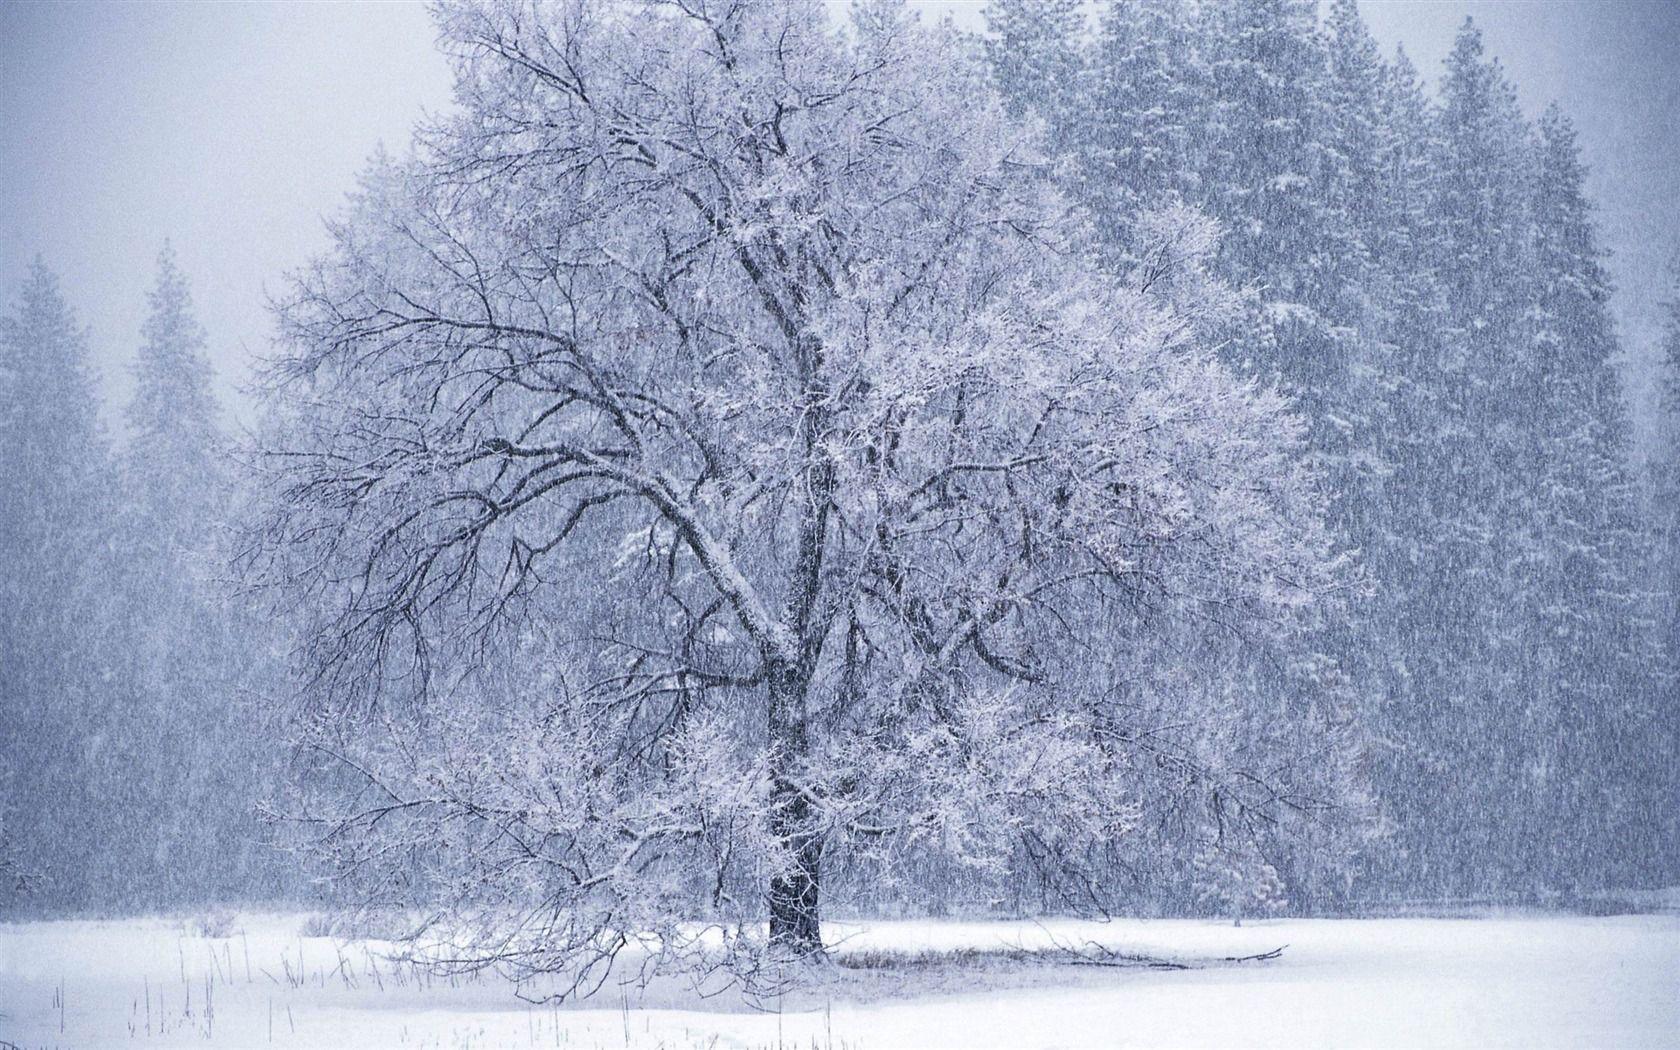 Winter Snow Scene Photography (id: 109037)